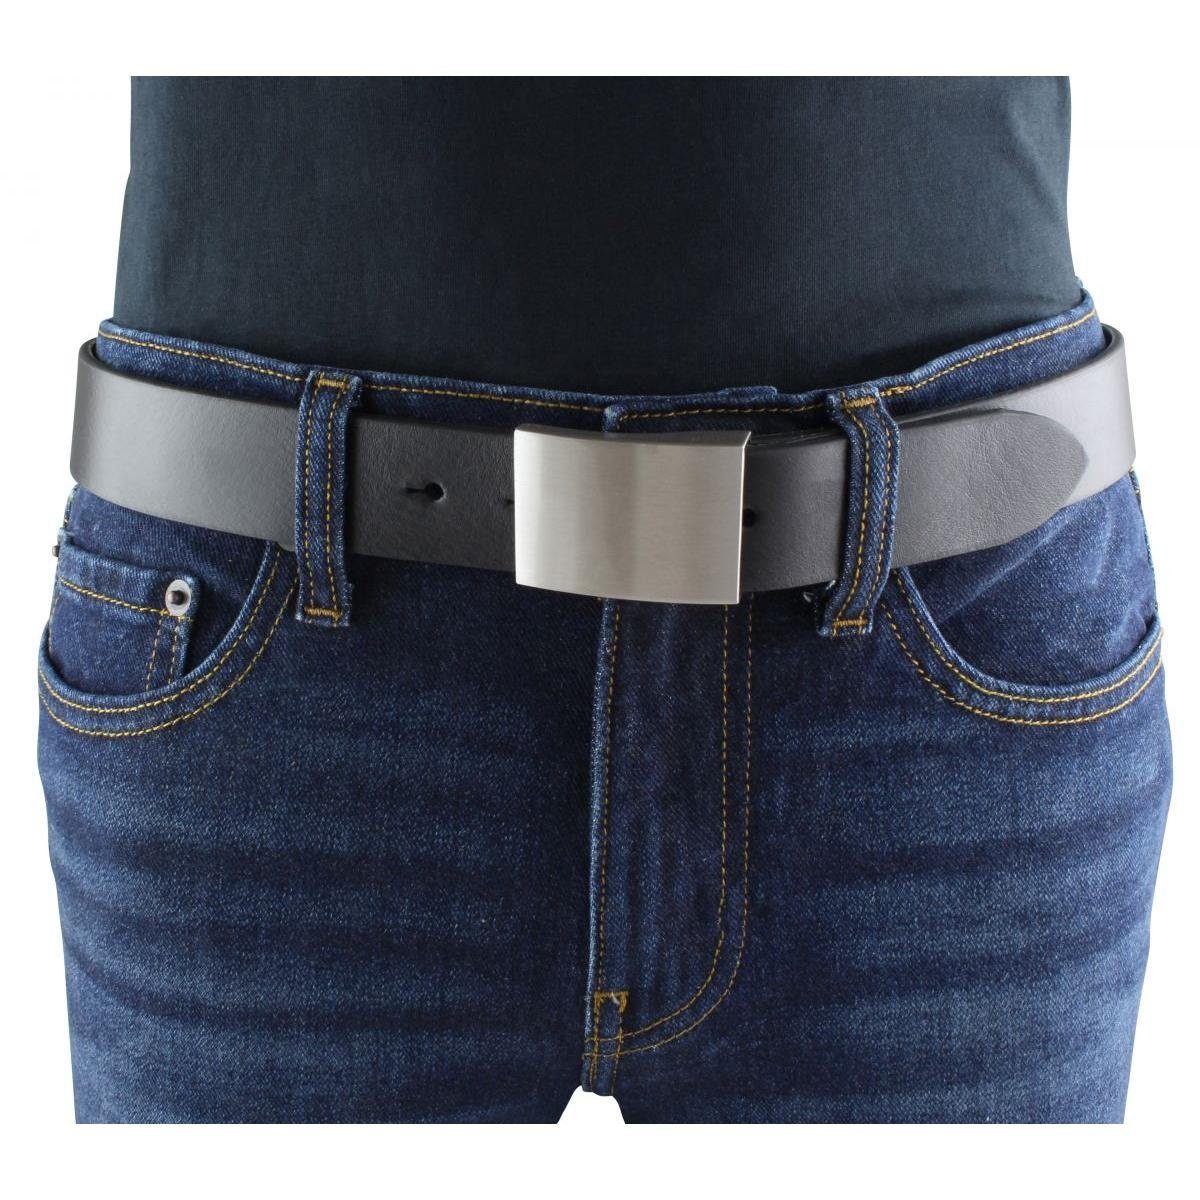 Jeans-Gürtel Damen 35mm Ledergürtel für 3,5 - Weiß, BELTINGER Silber Vollrindleder aus cm Herren Gürtel -